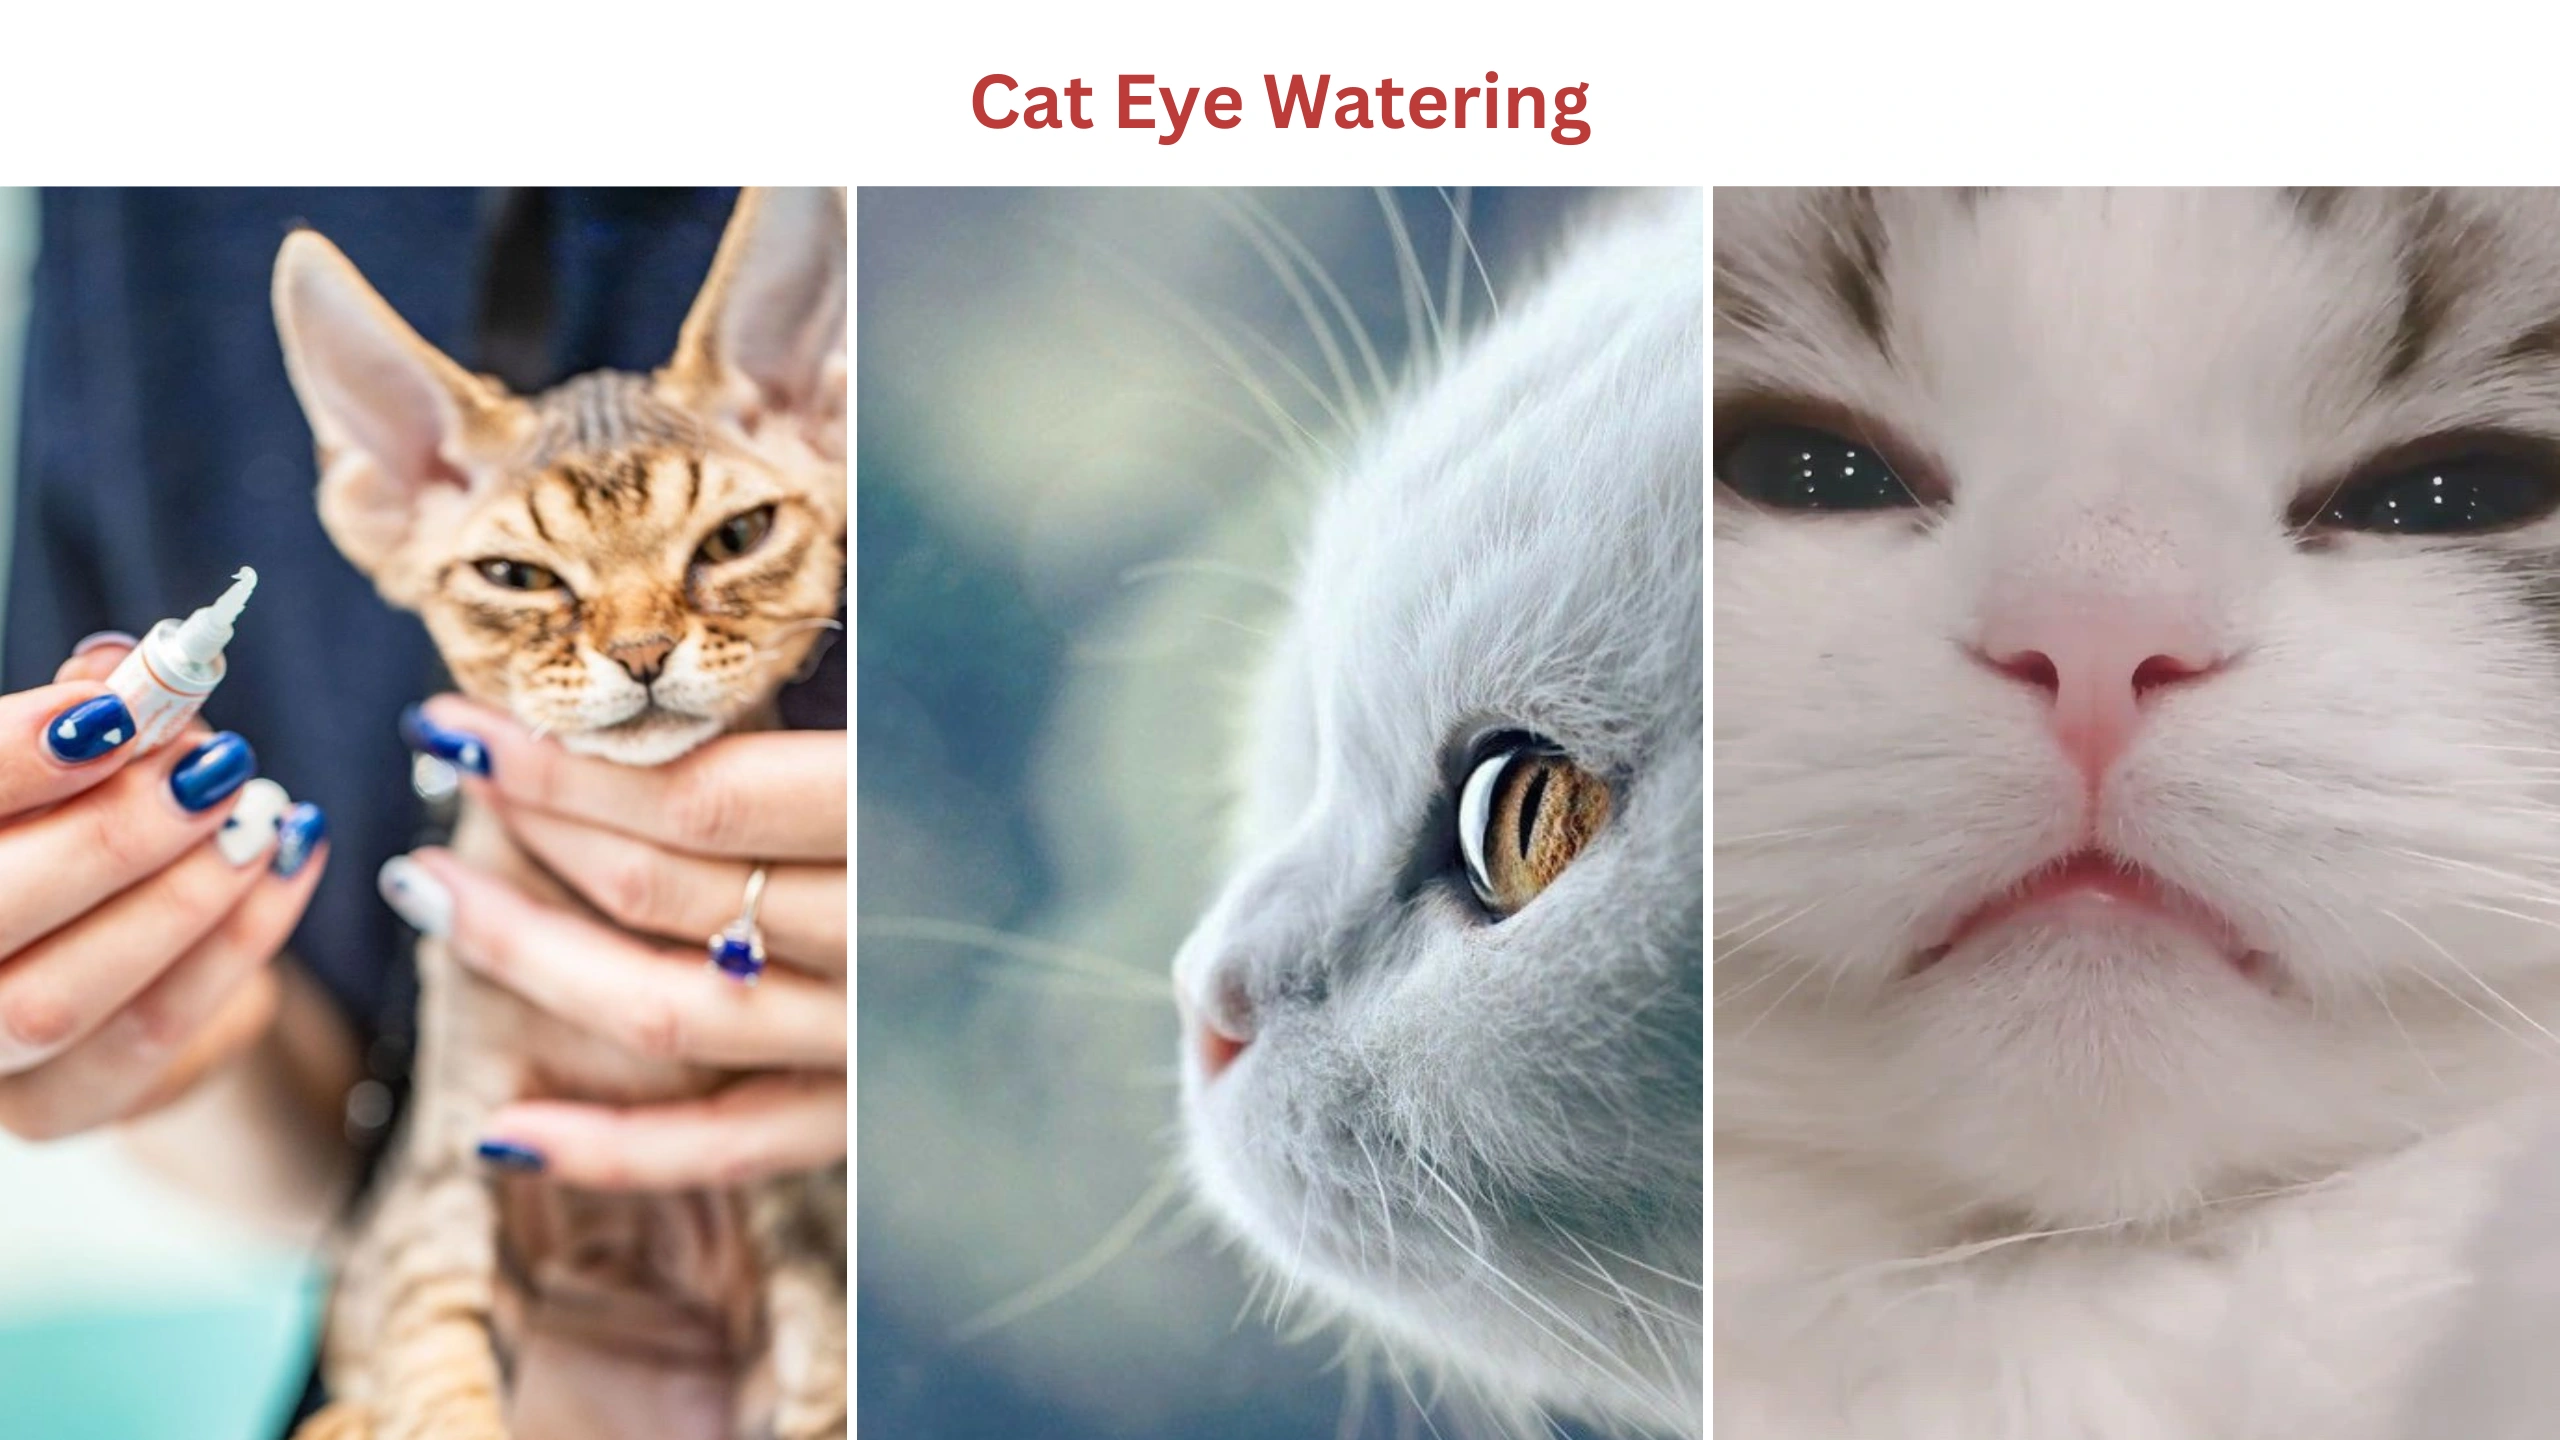 Cat eye watering